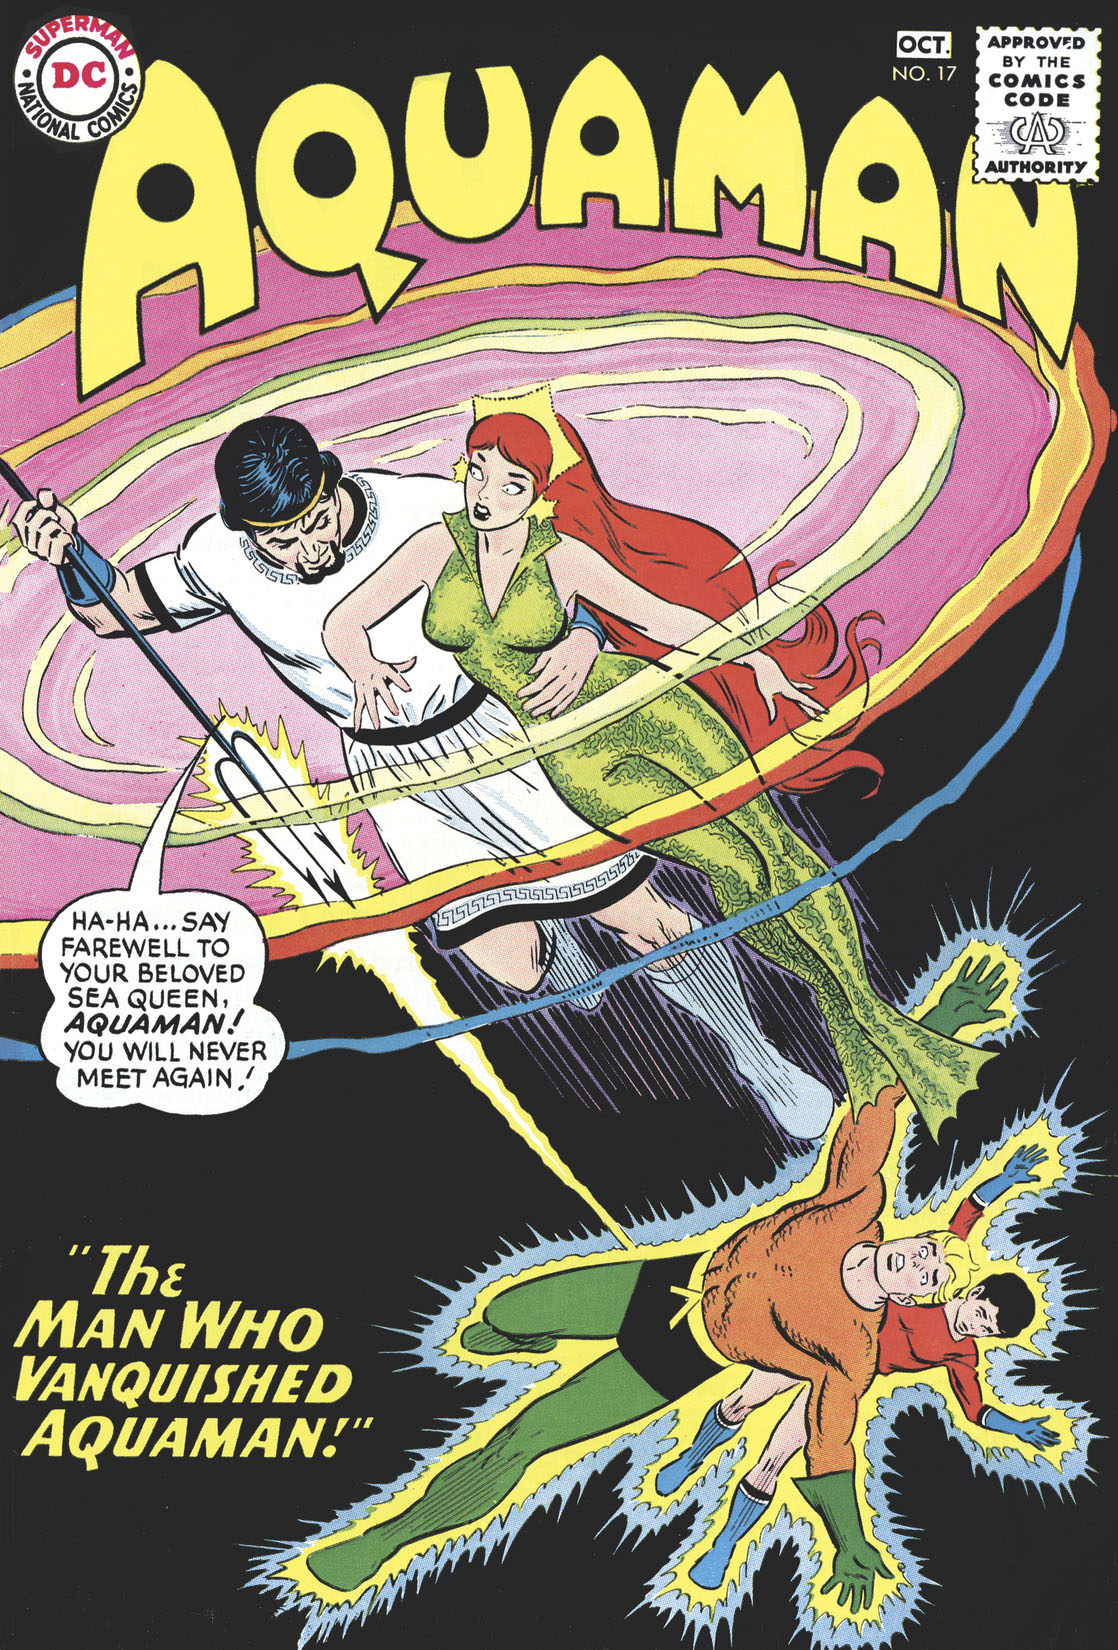 Aquaman (1962-) #17 preview images